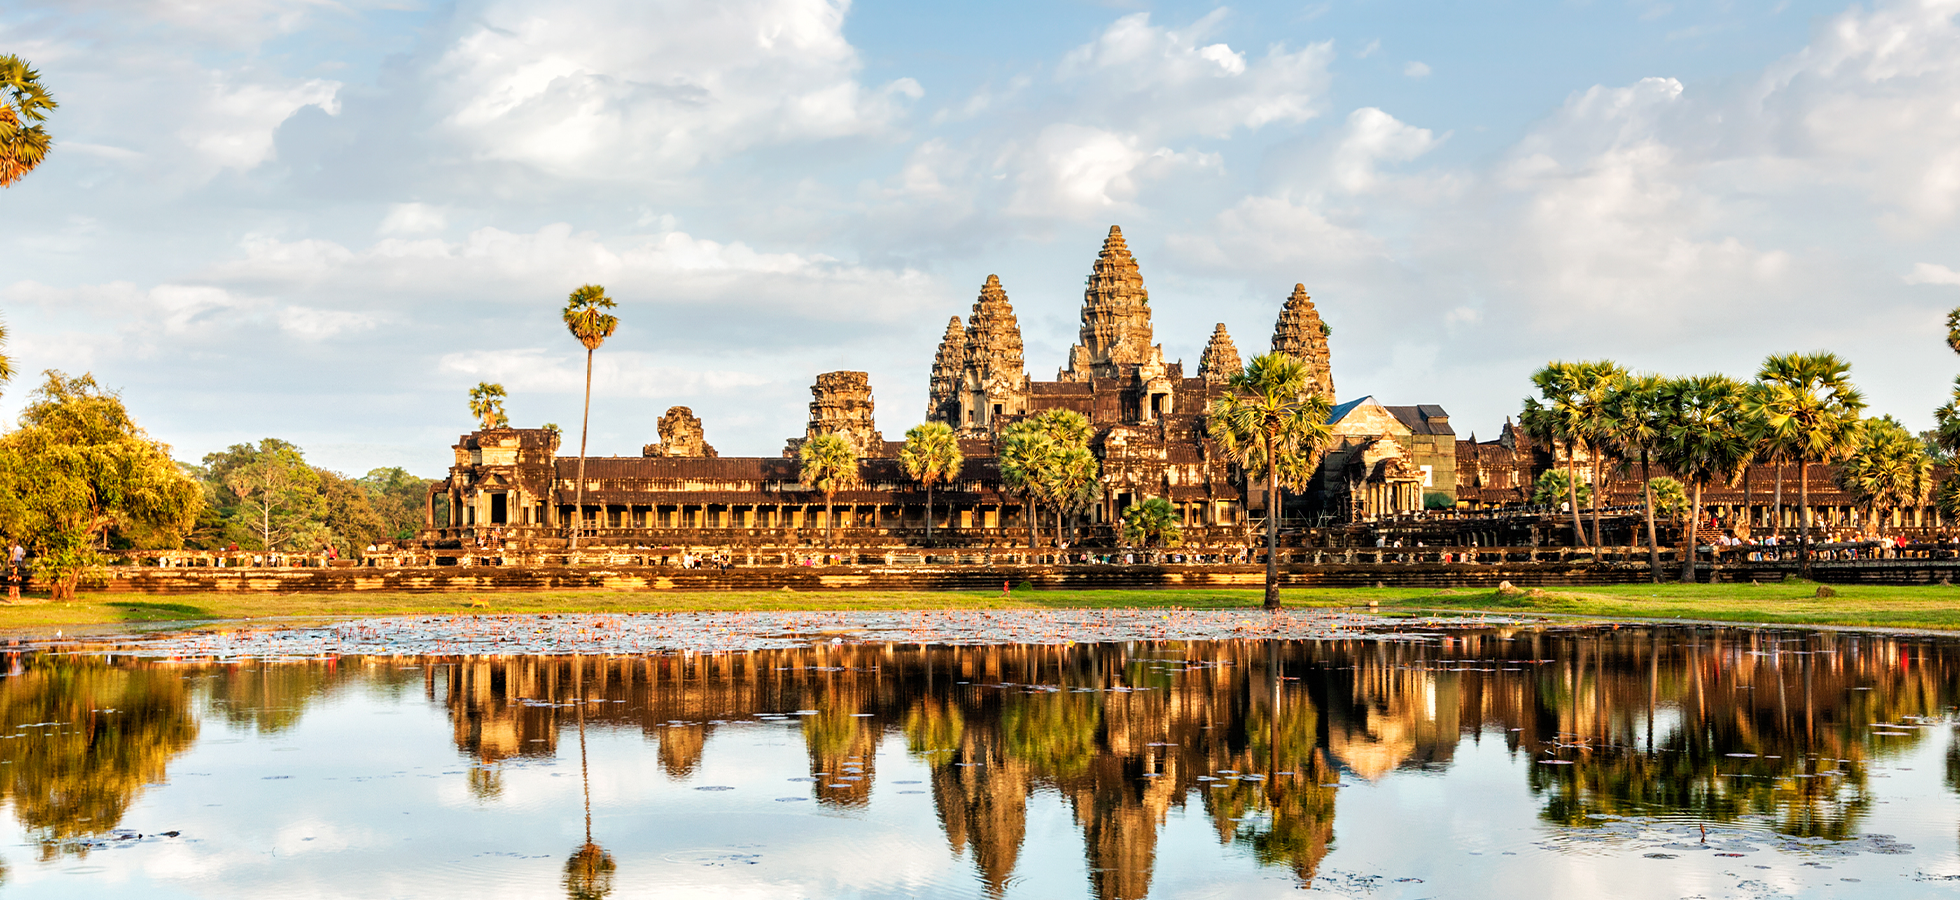 Angkor Wat - 1 trong 7 kỳ quan Thế giới